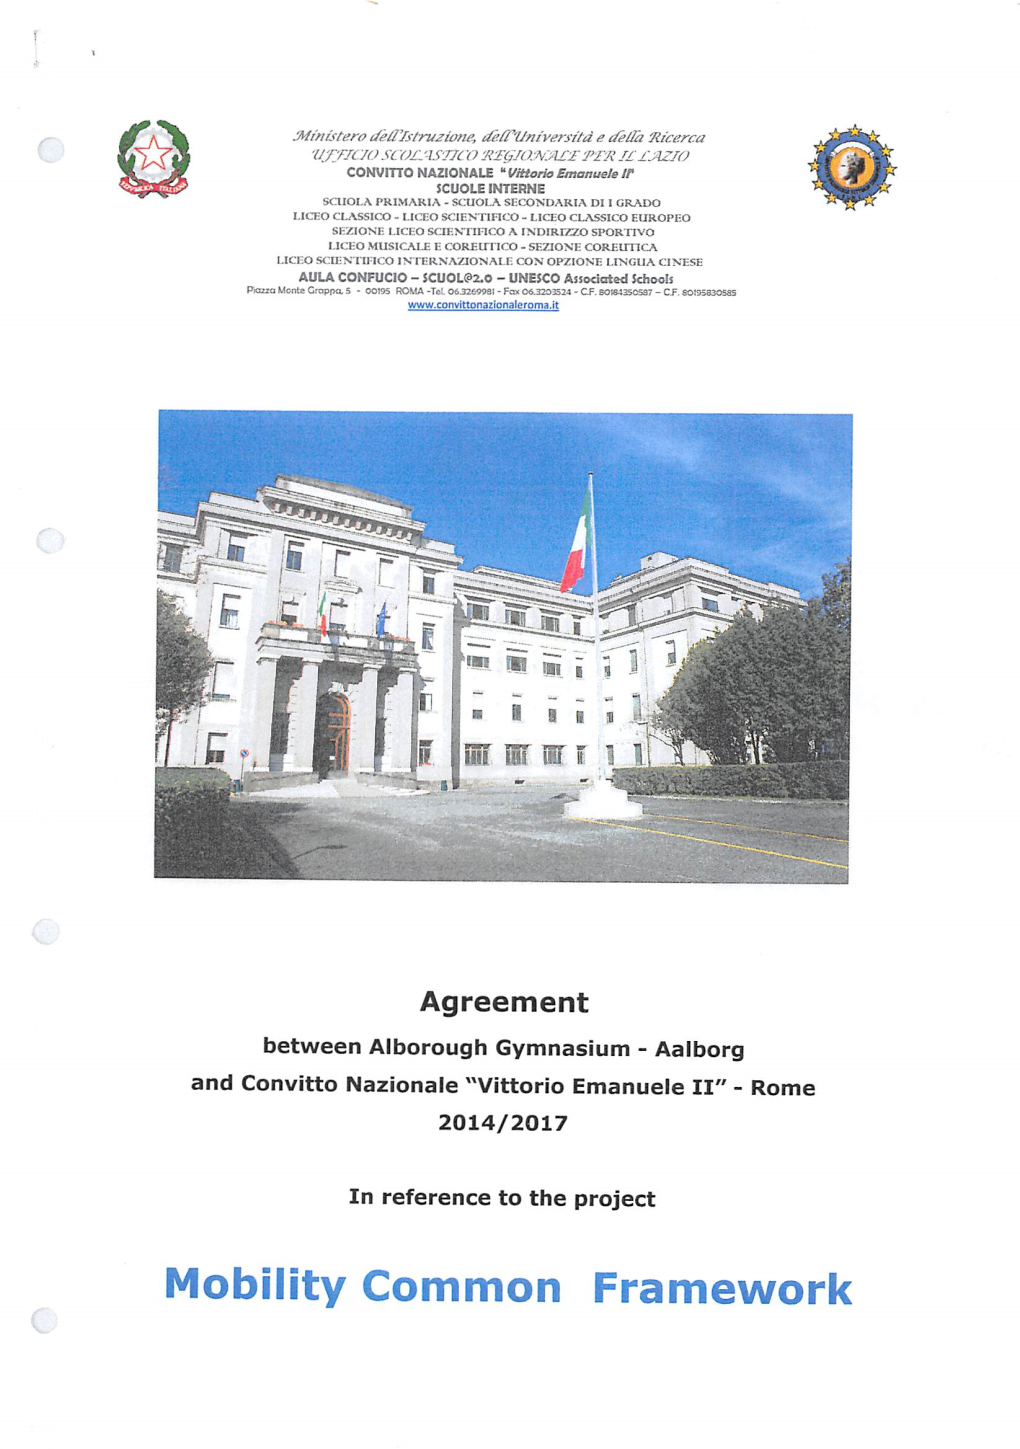 Agreement-Convitto-Aalborg